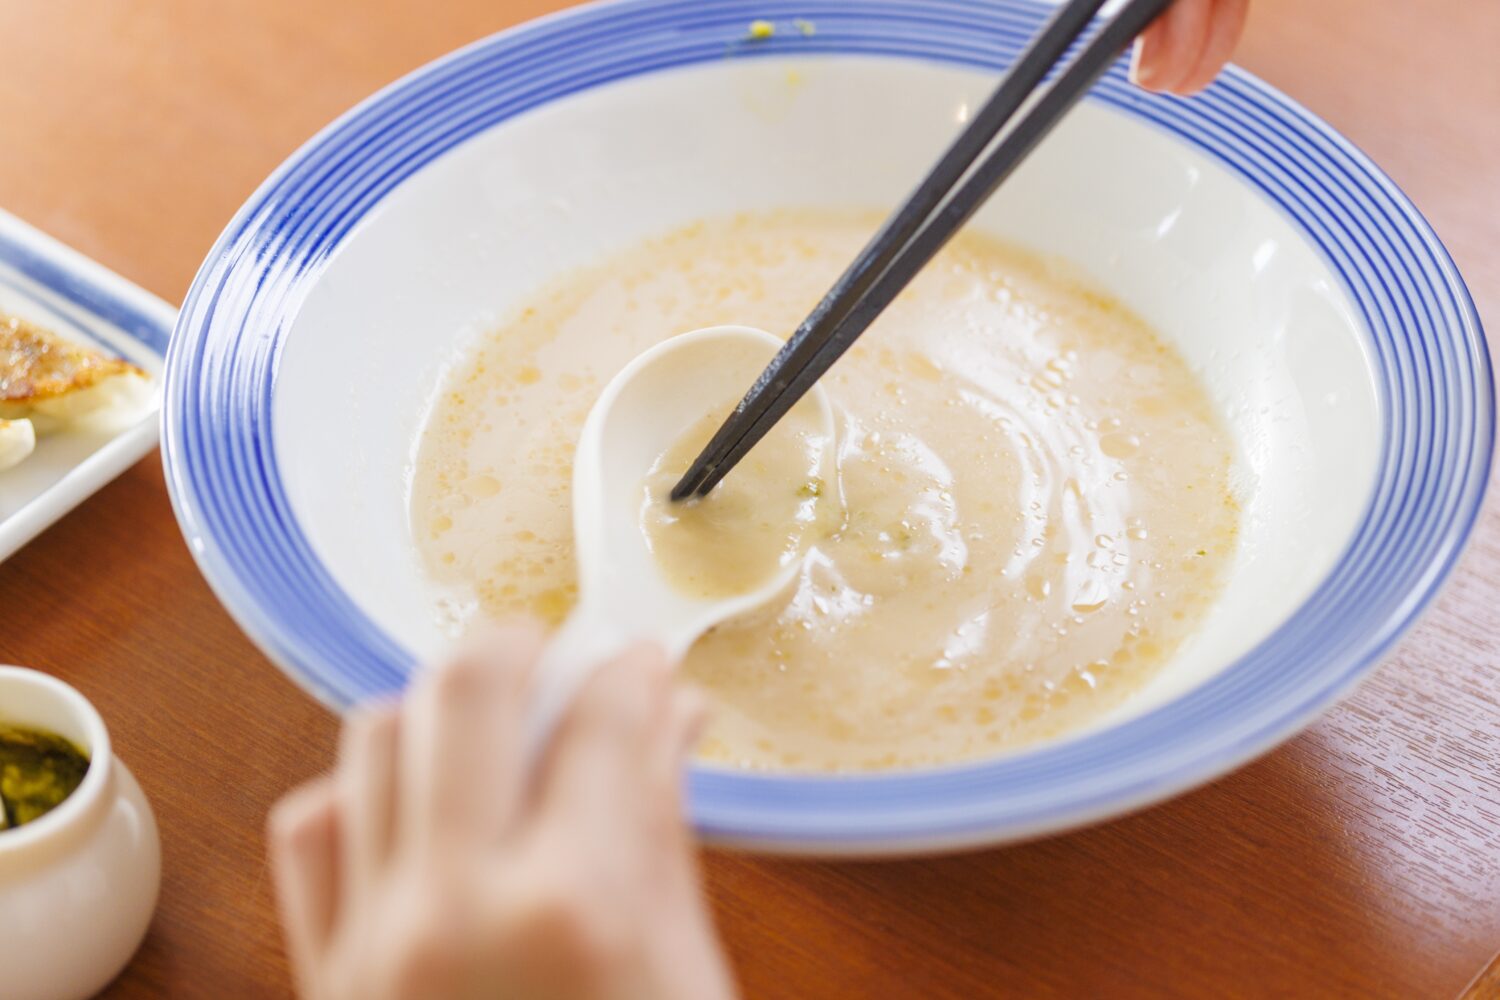 Finish off with gyoza (dumpling) soup.